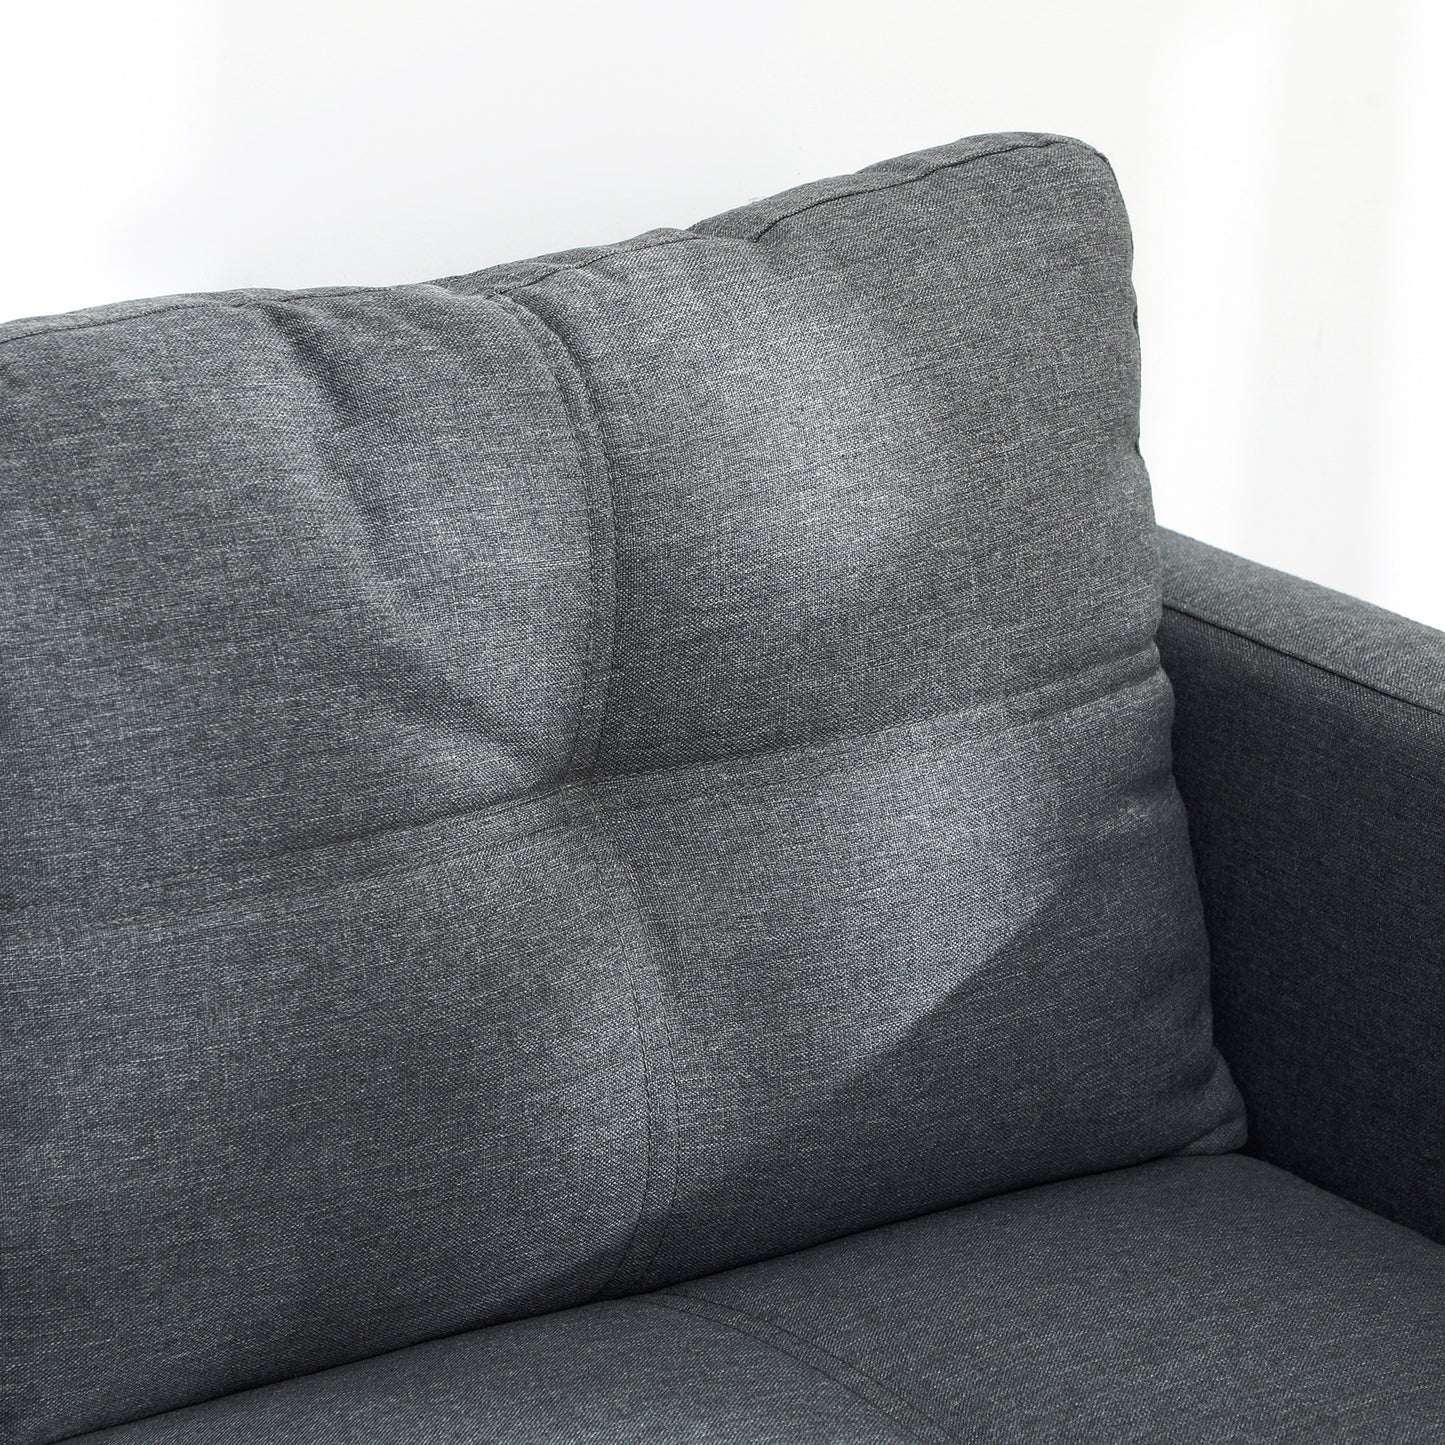 HOMCOM 133cm Loveseat Sofa, Modern Fabric Couch with Steel Legs, Upholstered 2 Seater Sofa for Living Room, Bedroom, Dark Grey